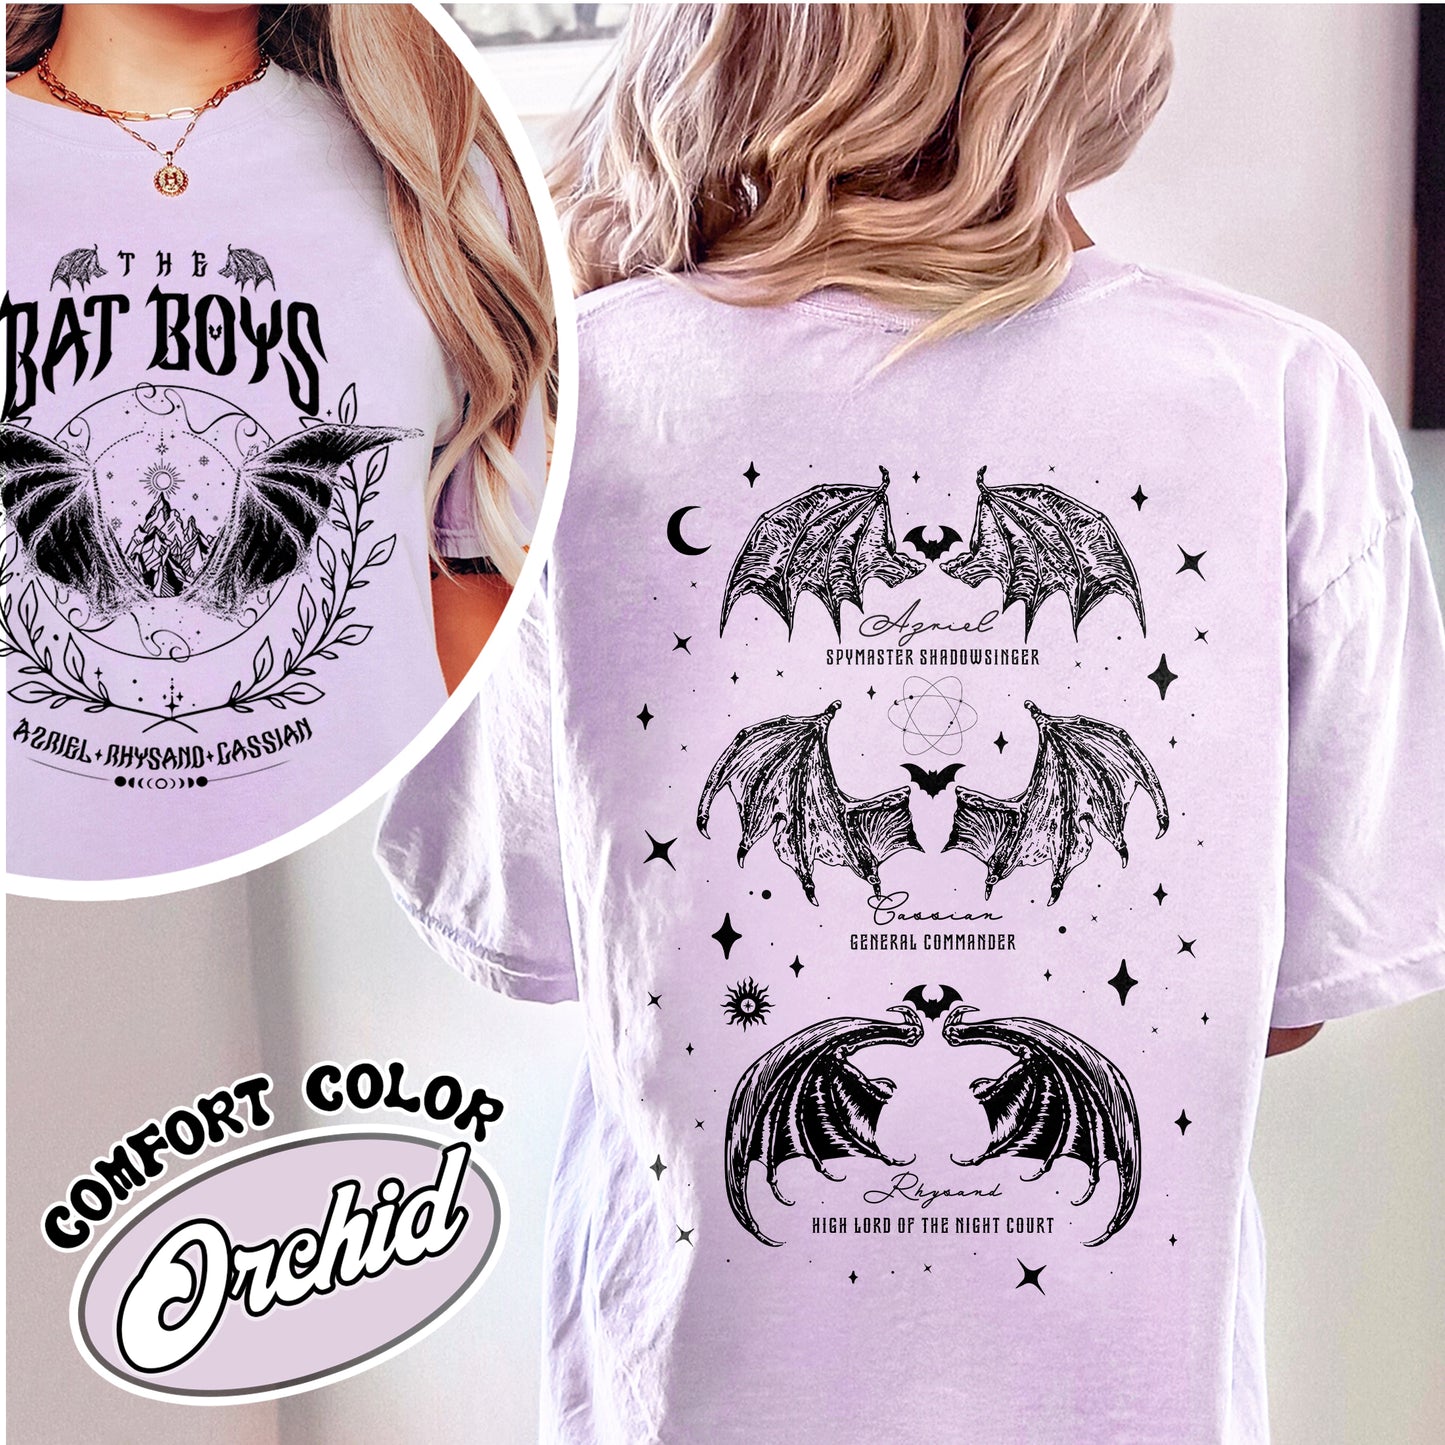 The Bat Boys Shirt, The Night Court Acotar Shirt, Acotar the Bat Boy